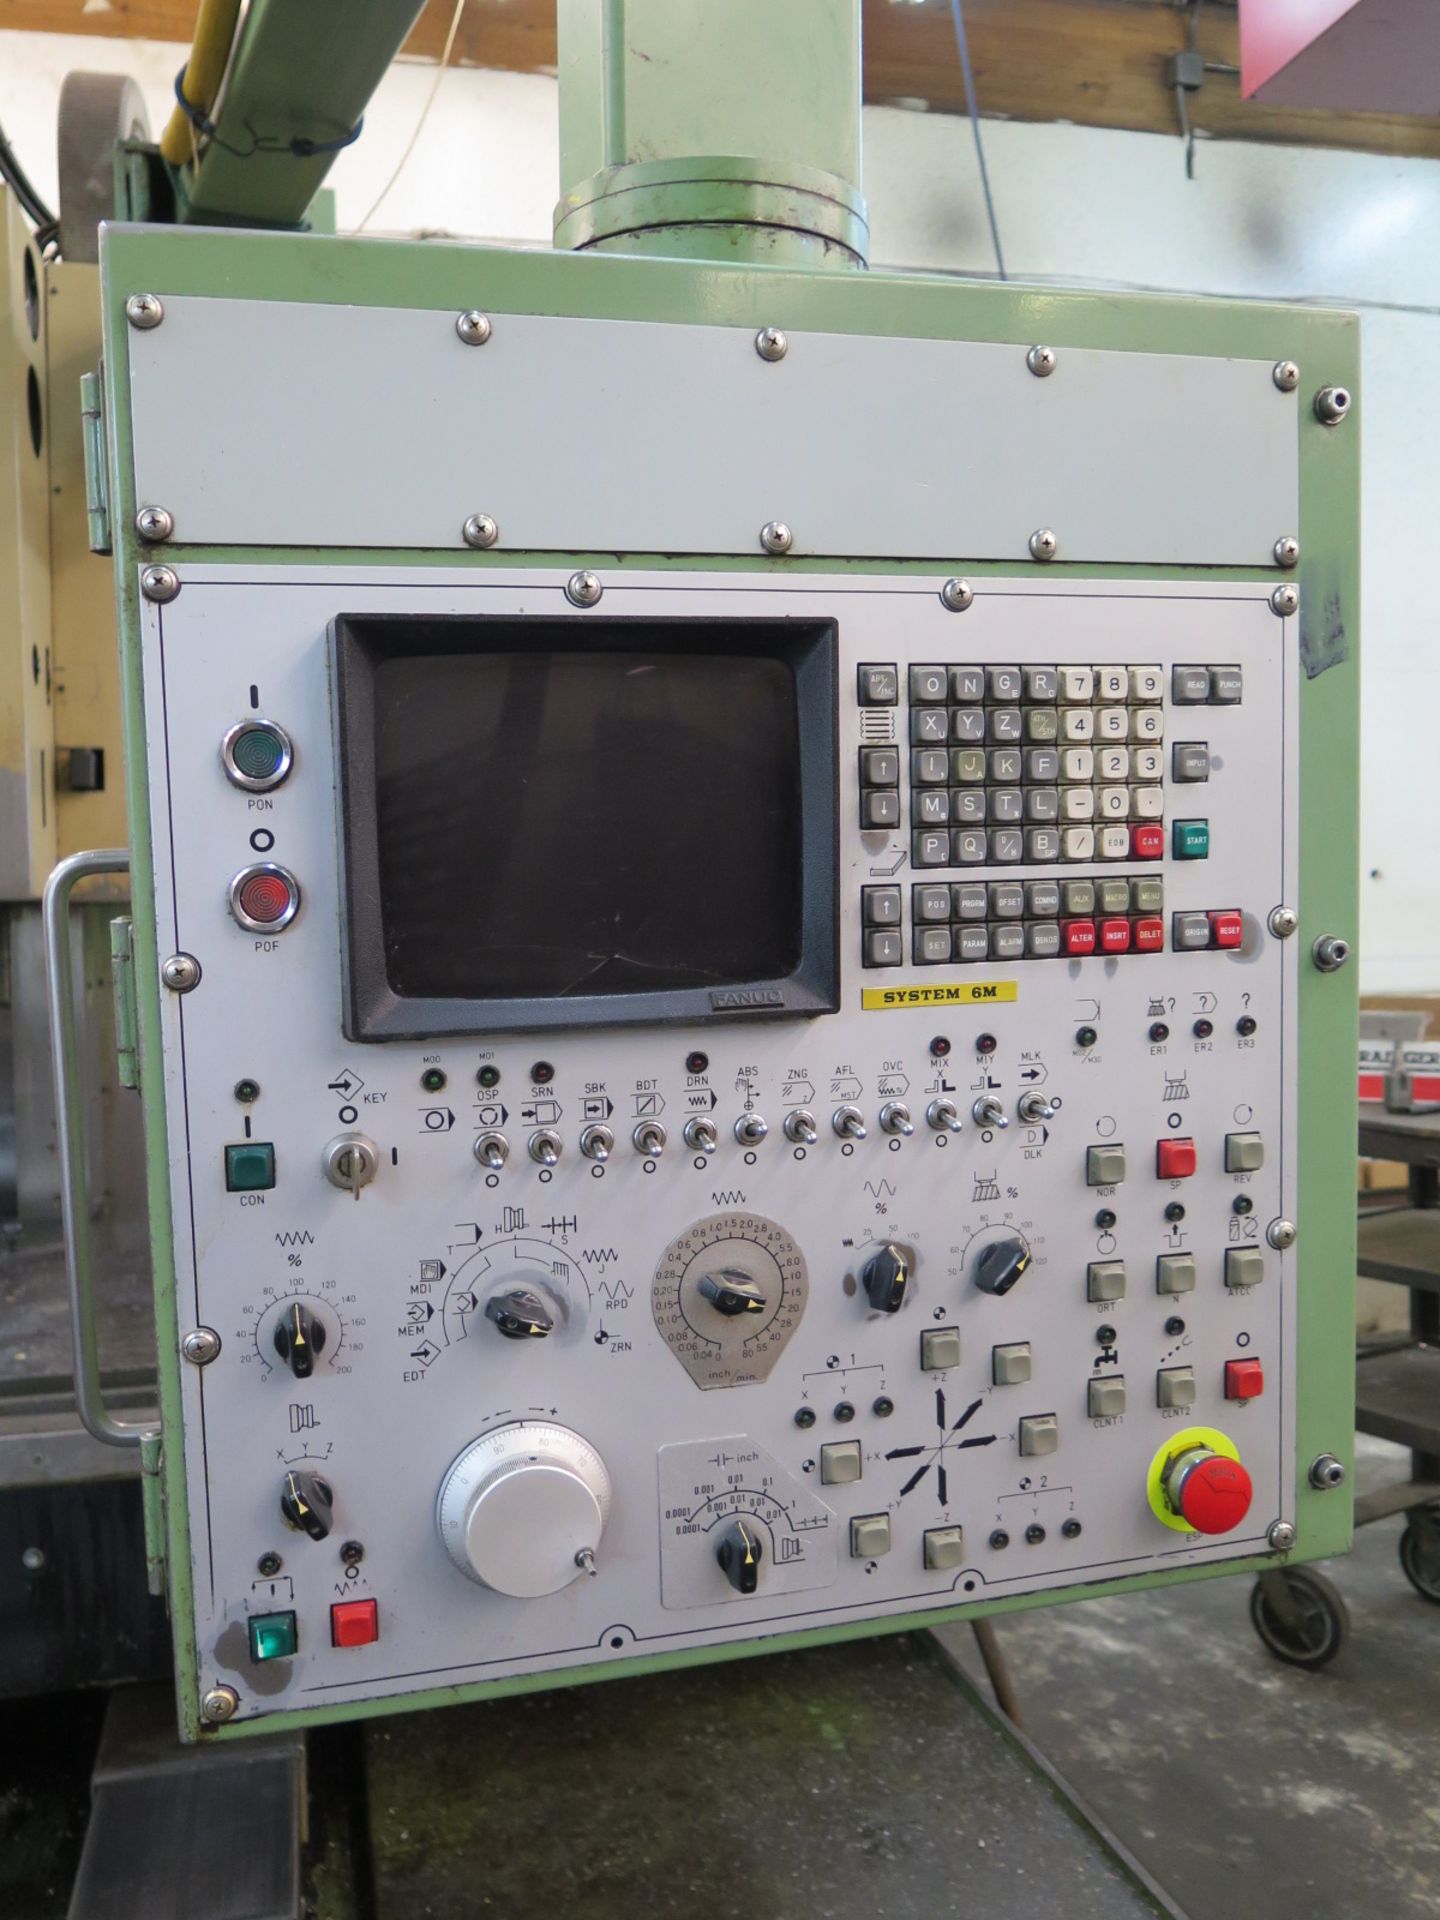 Mori Seiki MV-50W CNC Vertical Machining Center s/n 3 w/ Fanuc System 6-M Controls, 32-Station ATC, - Image 2 of 8